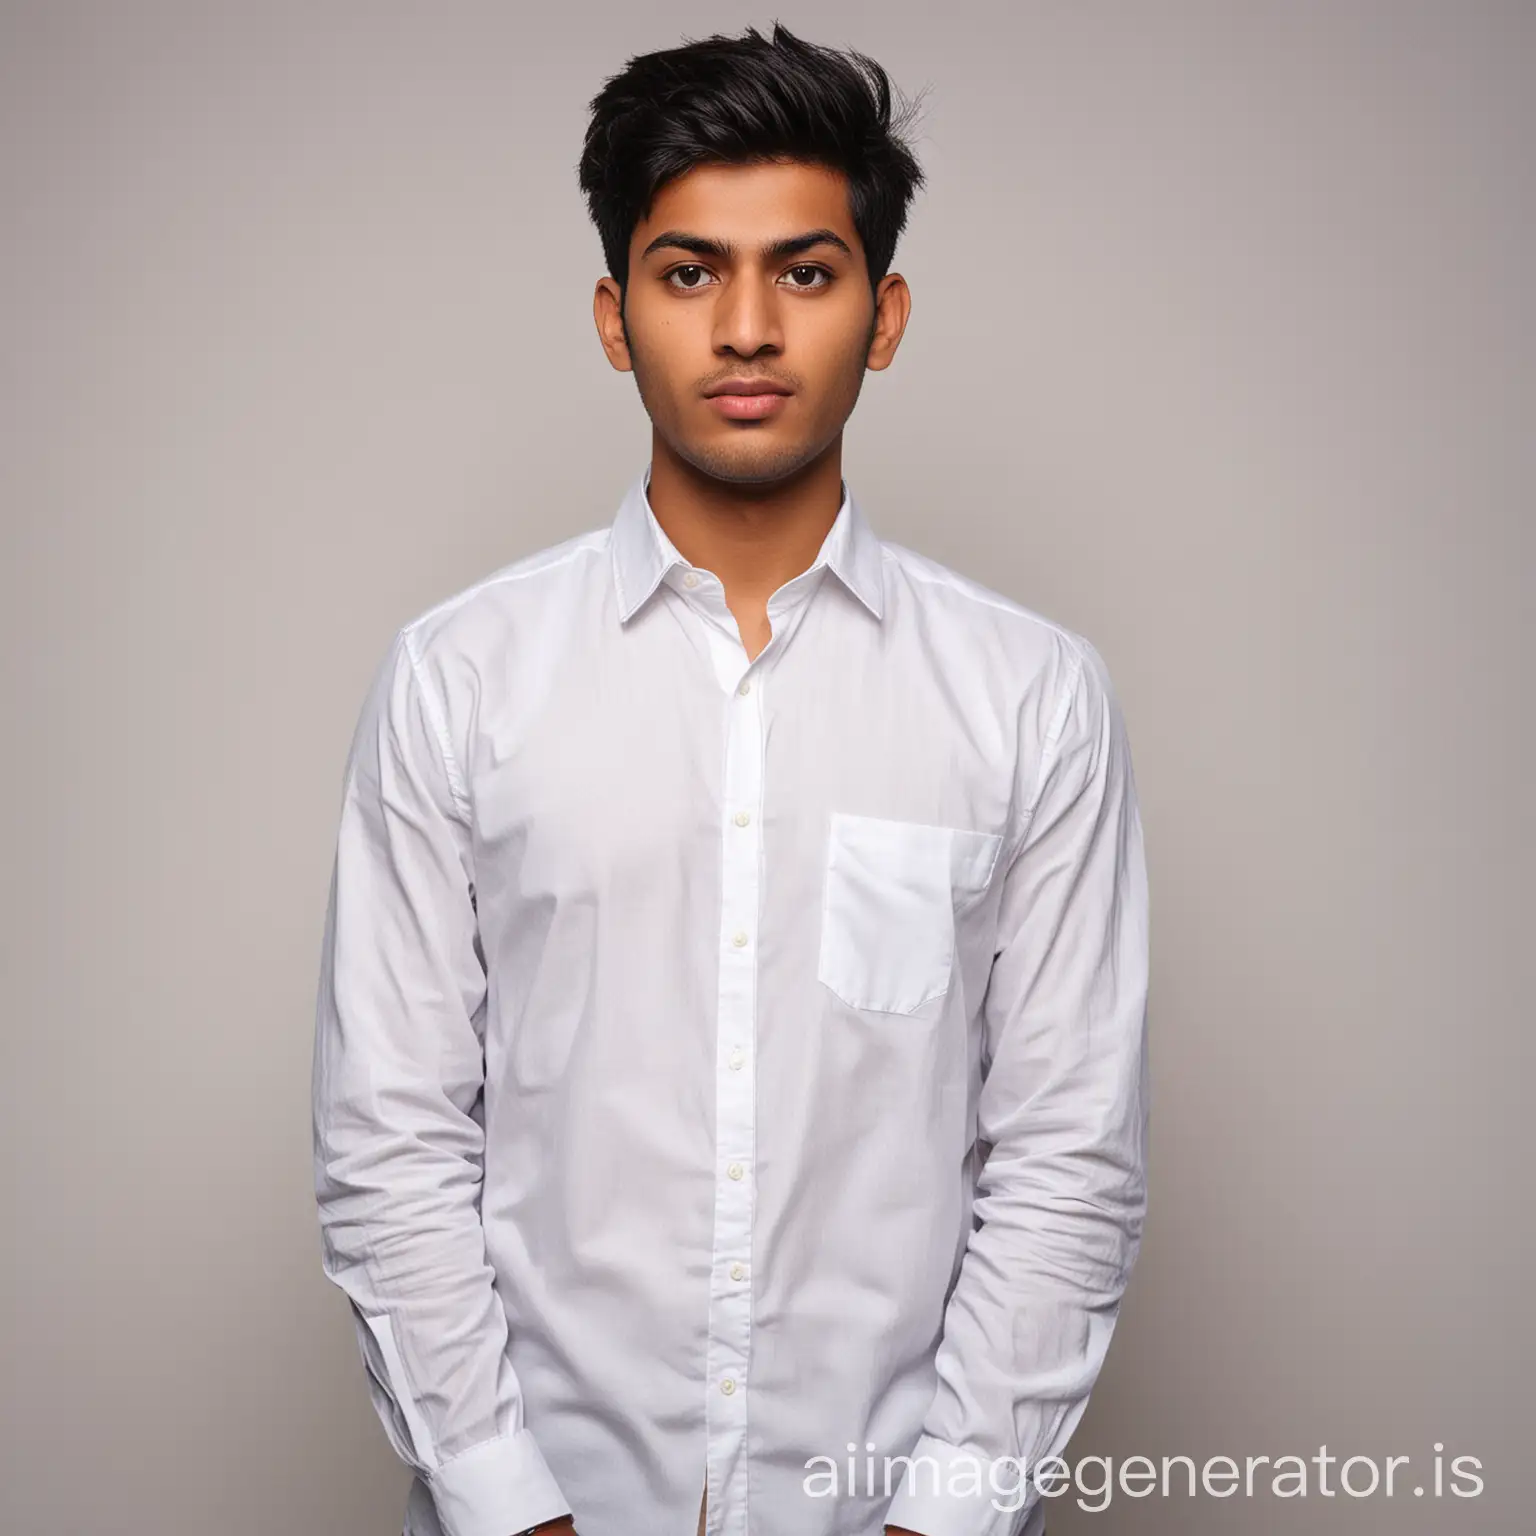 Serious-South-Asian-Man-Posing-for-Passport-Photo-in-White-Shirt